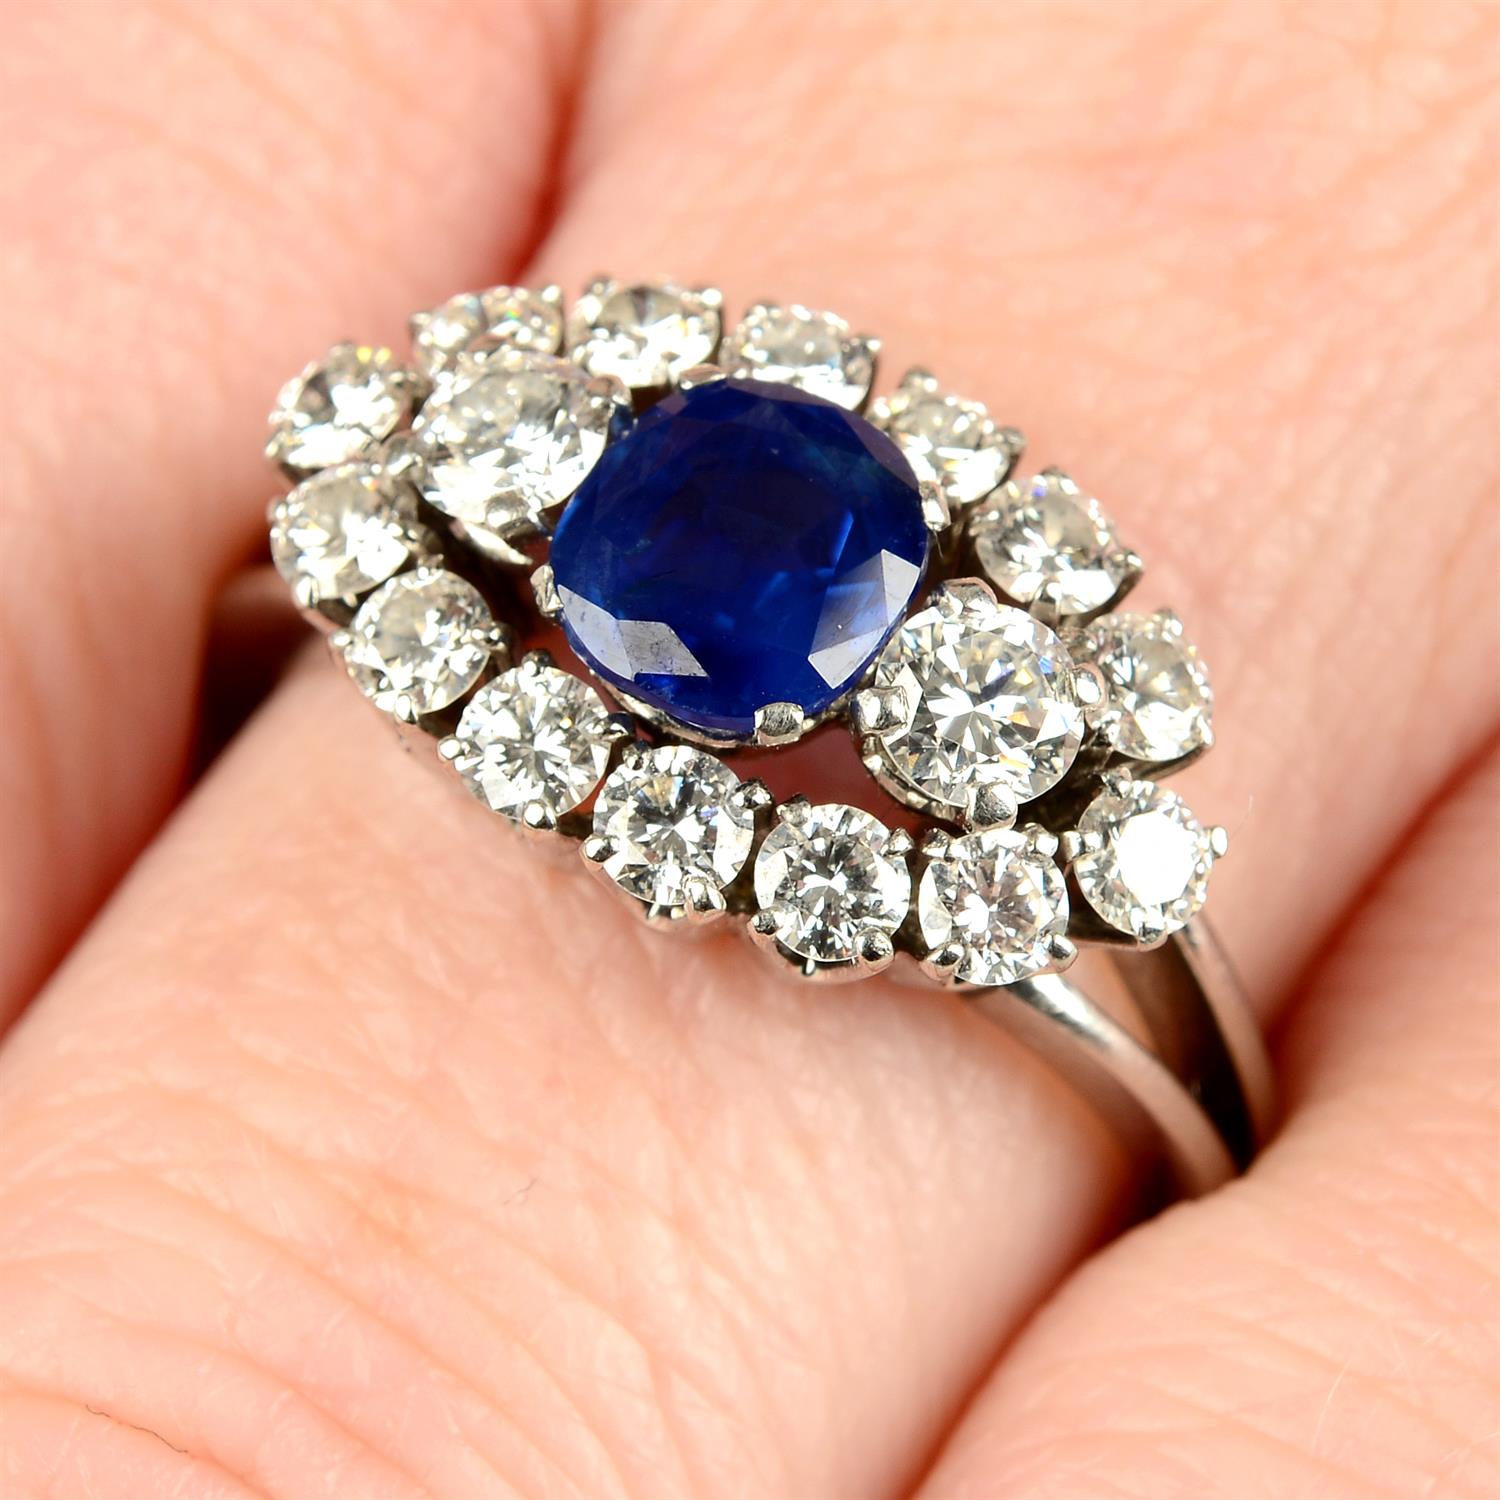 A Basaltic sapphire and brilliant-cut diamond dress ring.